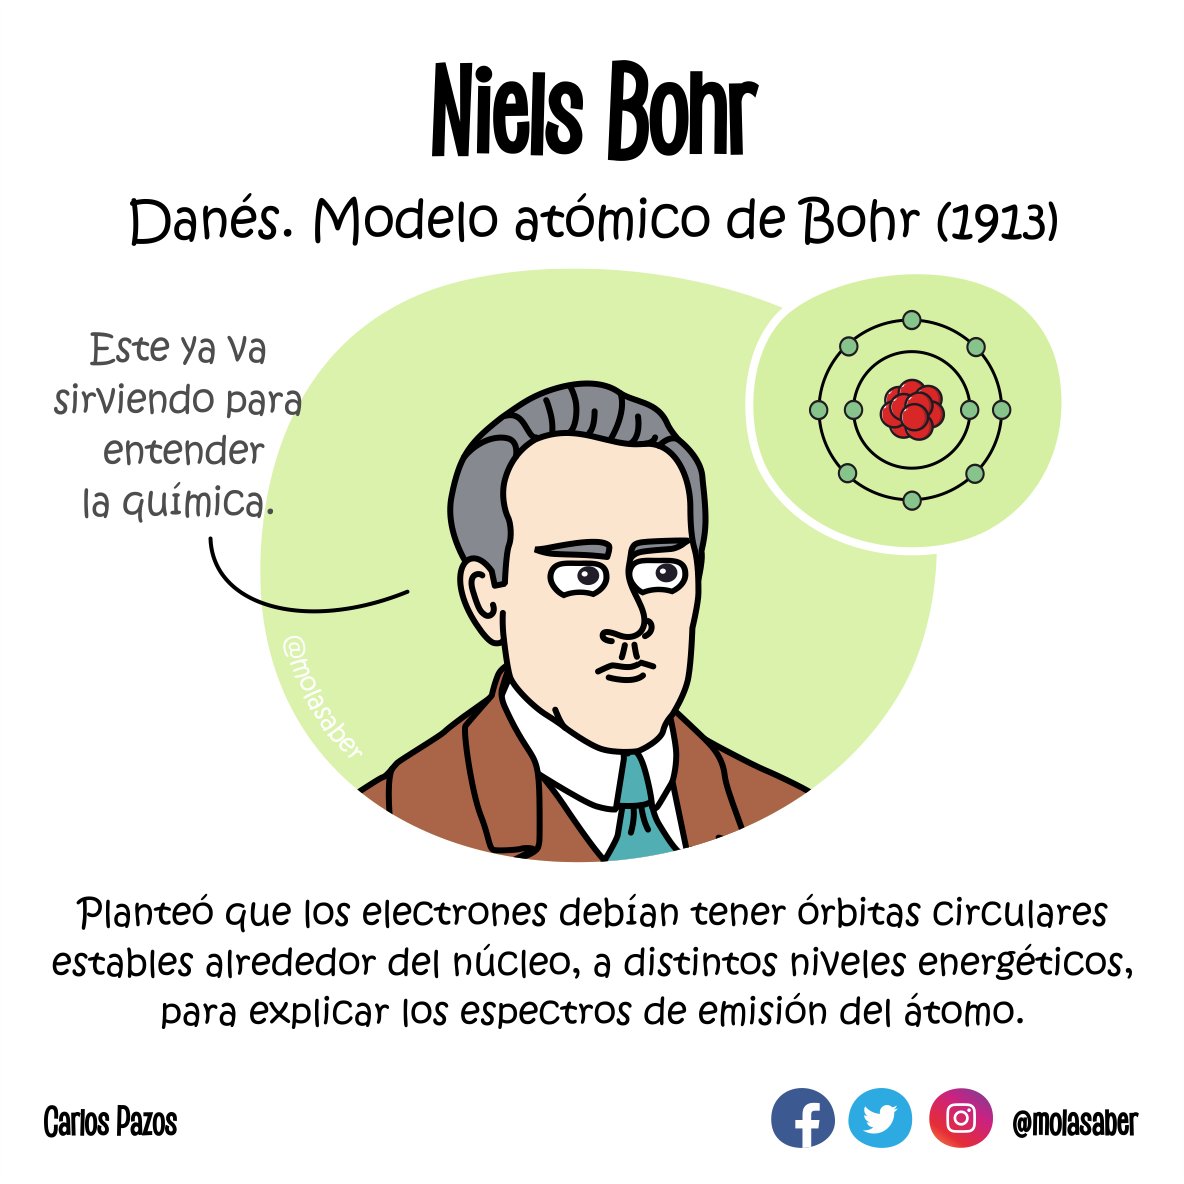 MODELOS ATÓMICOS: Modelo de Bohr